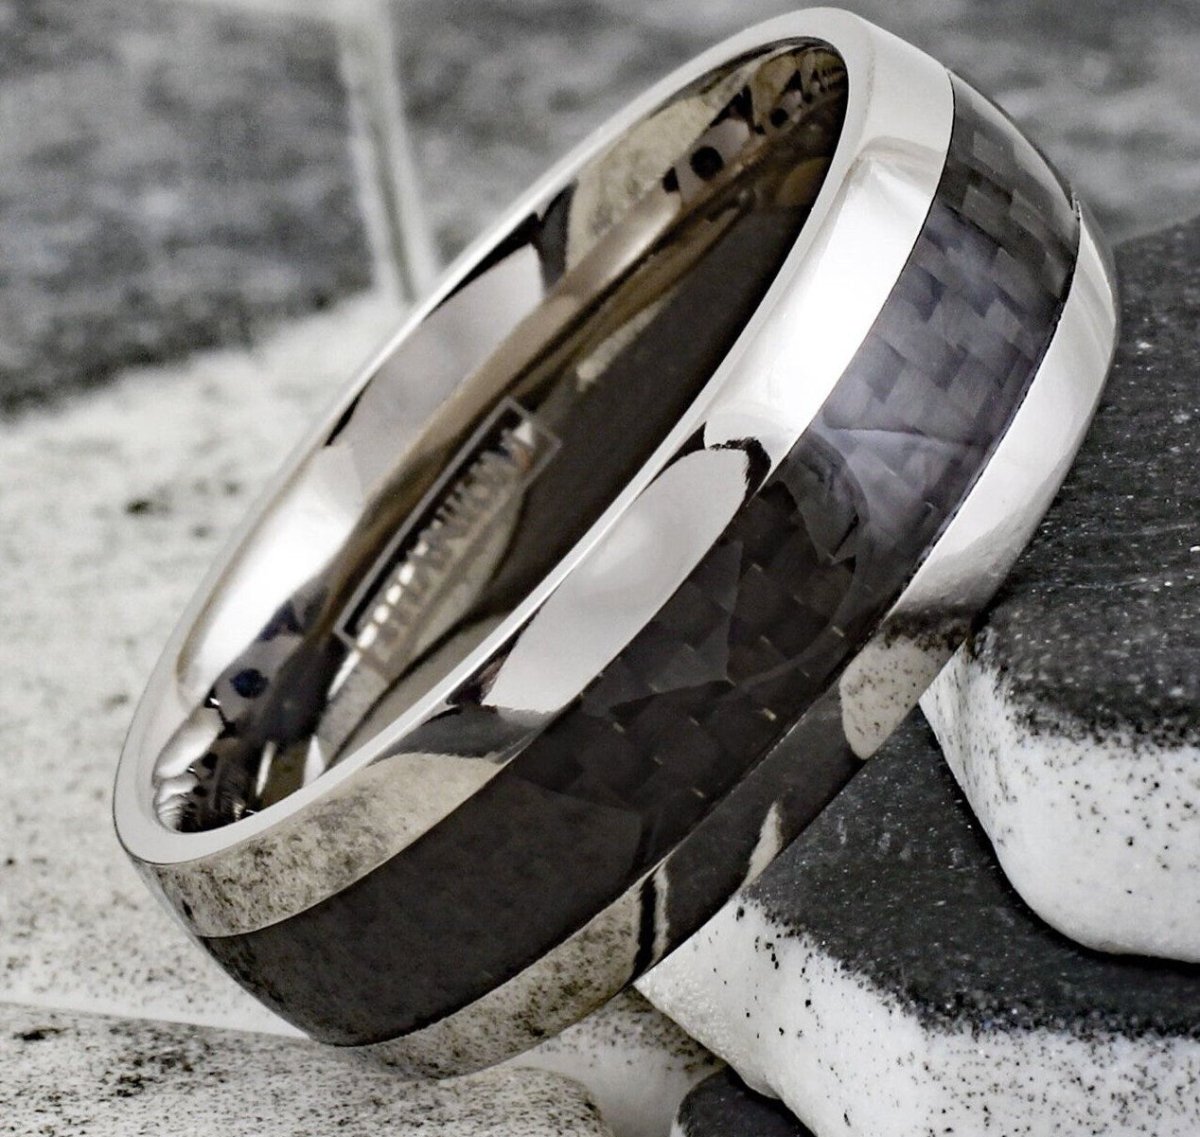 Black Fiber - Silver Titanium Ring with Carbon Fiber Inlay